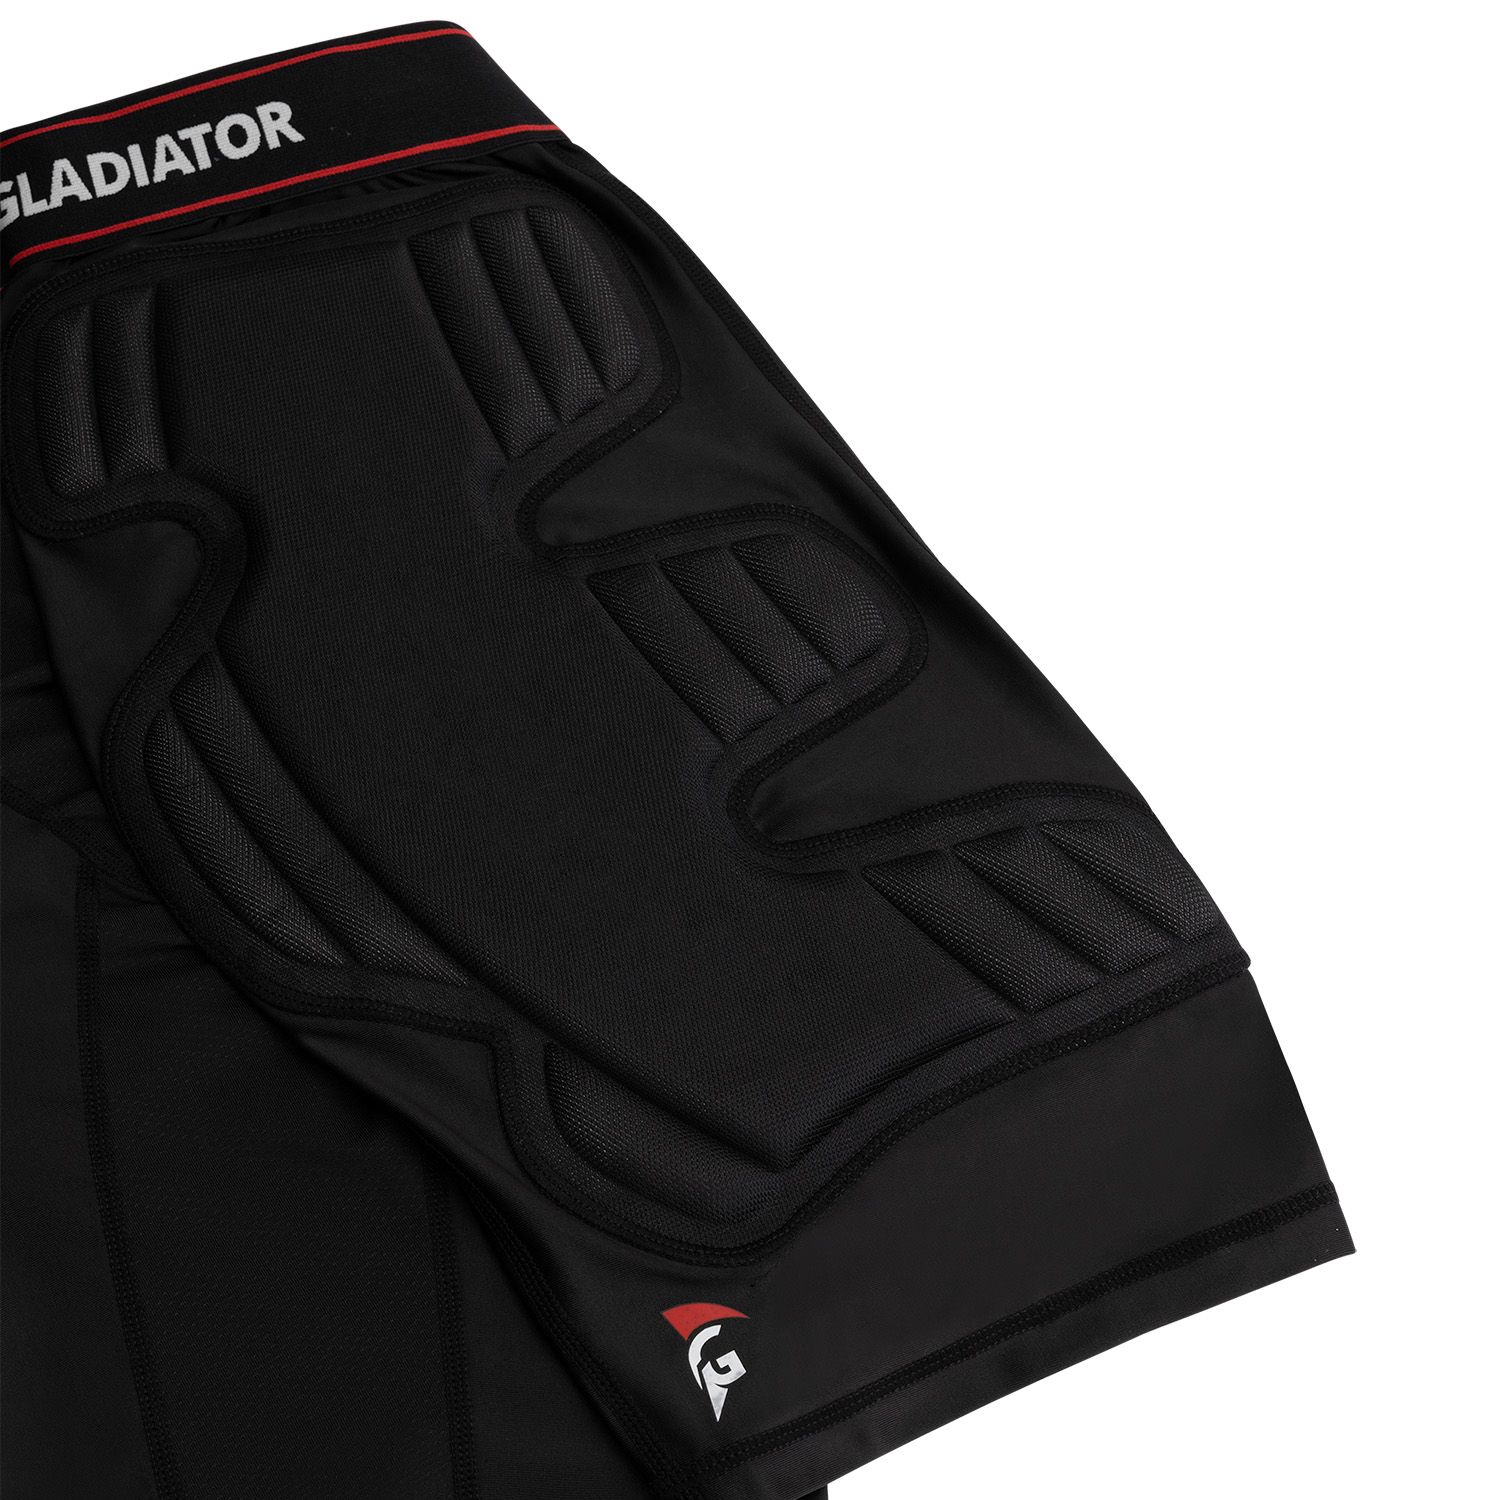 gladiator goalkeeper protection shorts detail